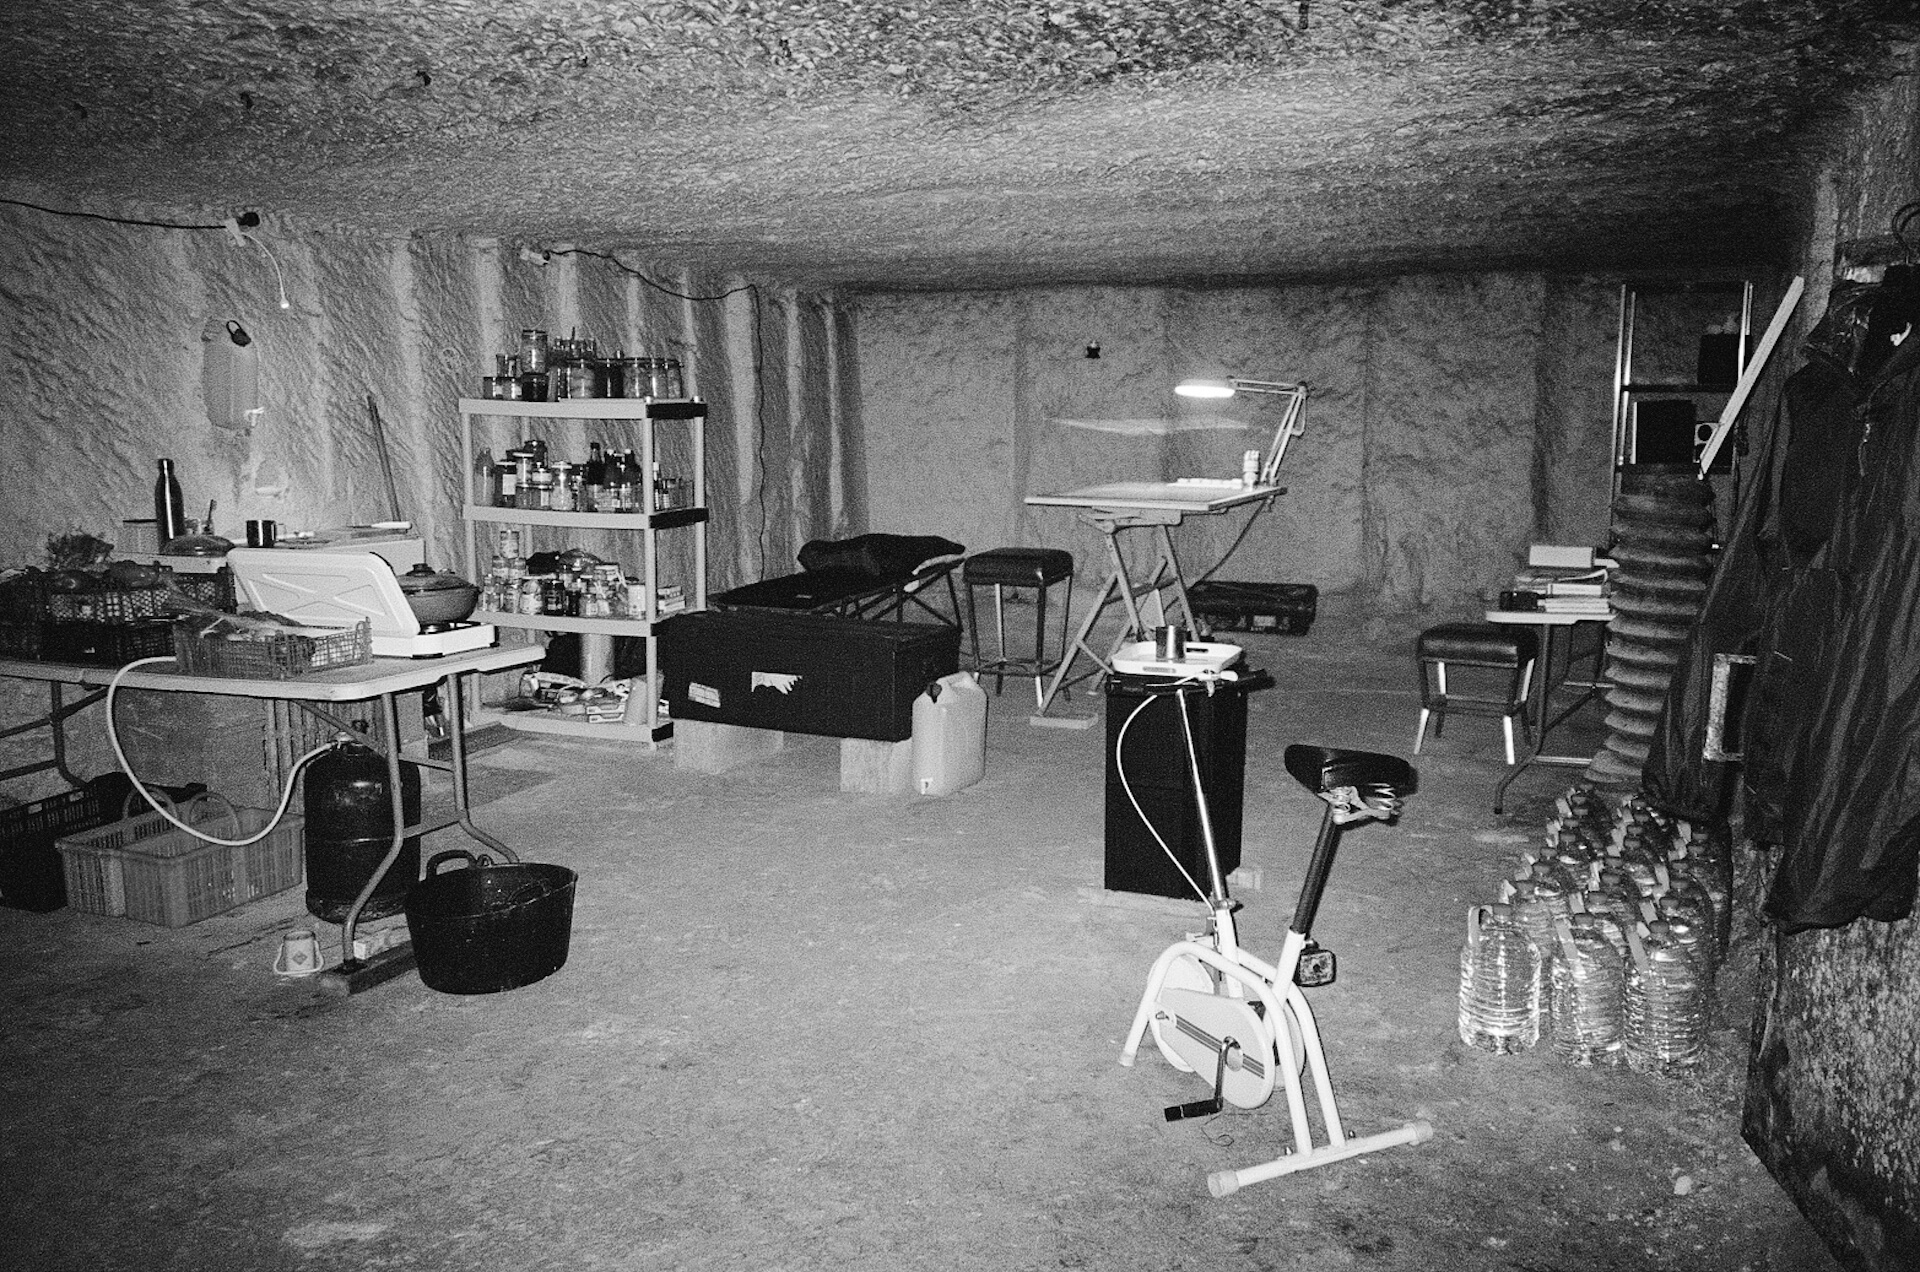 Jack Tezamの地下洞窟での隔離生活を覗き見る展示＜EXPÉRIENCE DISTORSION＞代官山・LAID BUGにて開催 artculture230208-jack-tezam2